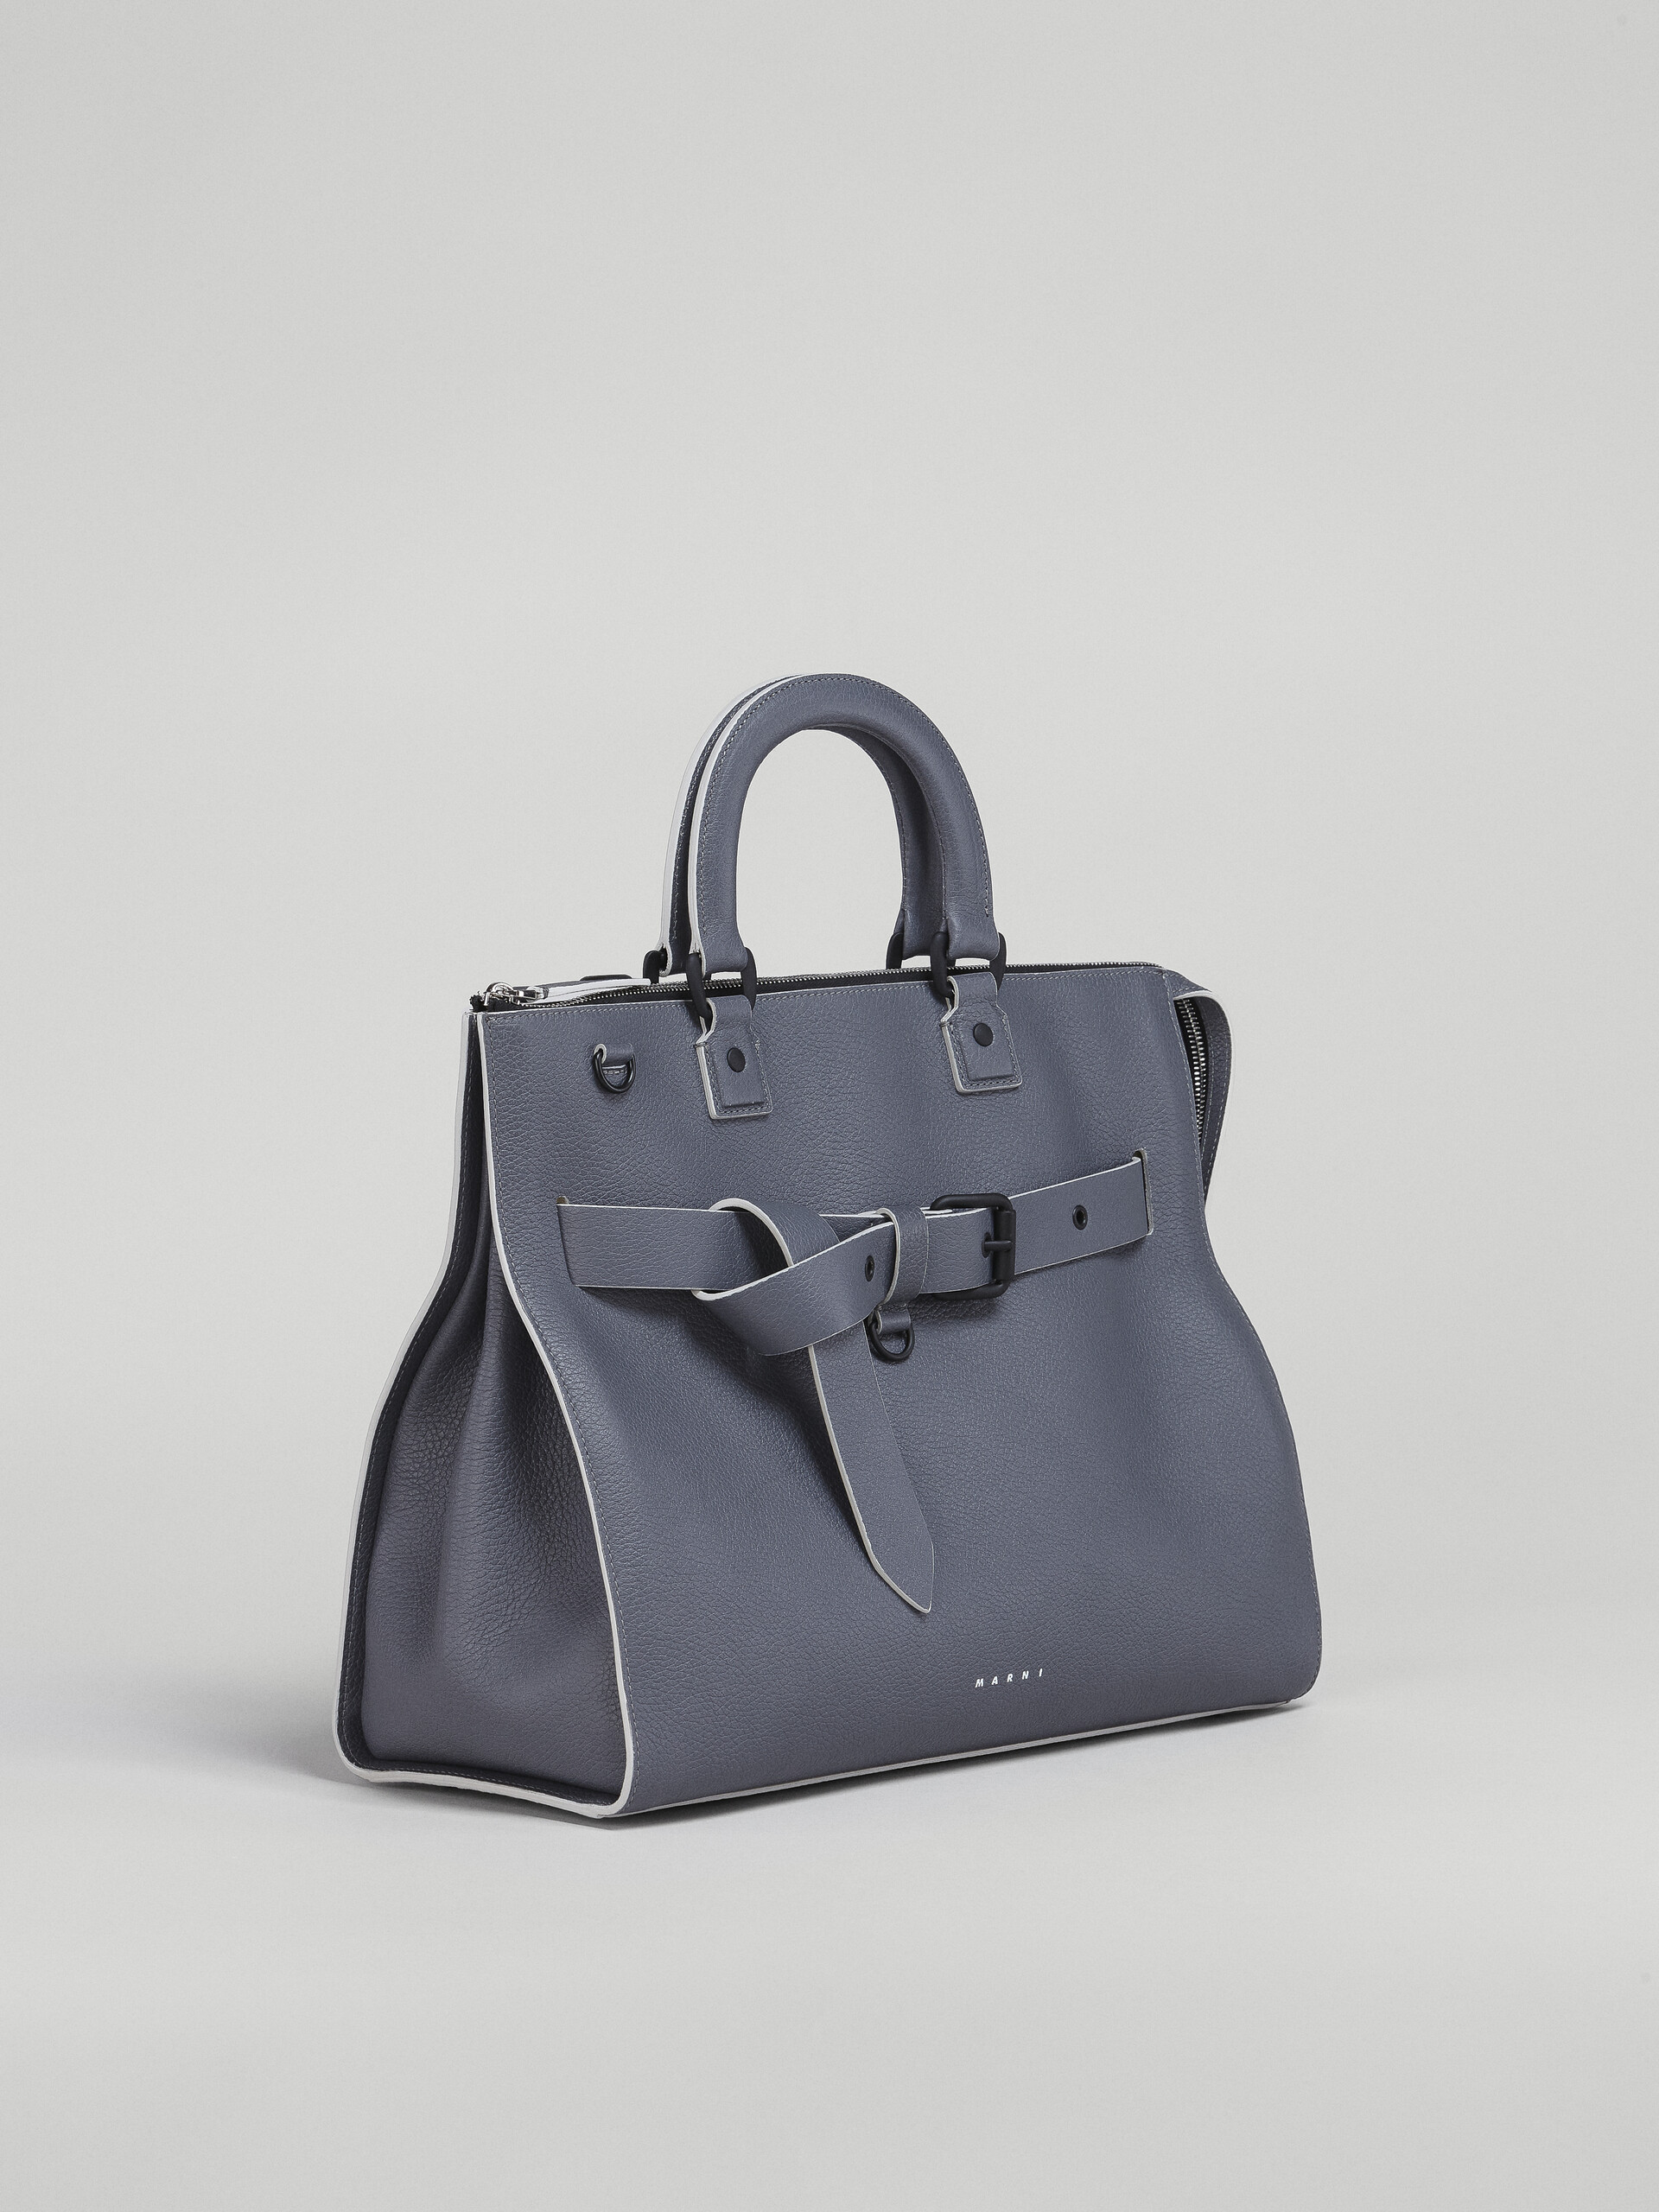 TREASURE bag in grained calf leather - Handbag - Image 6